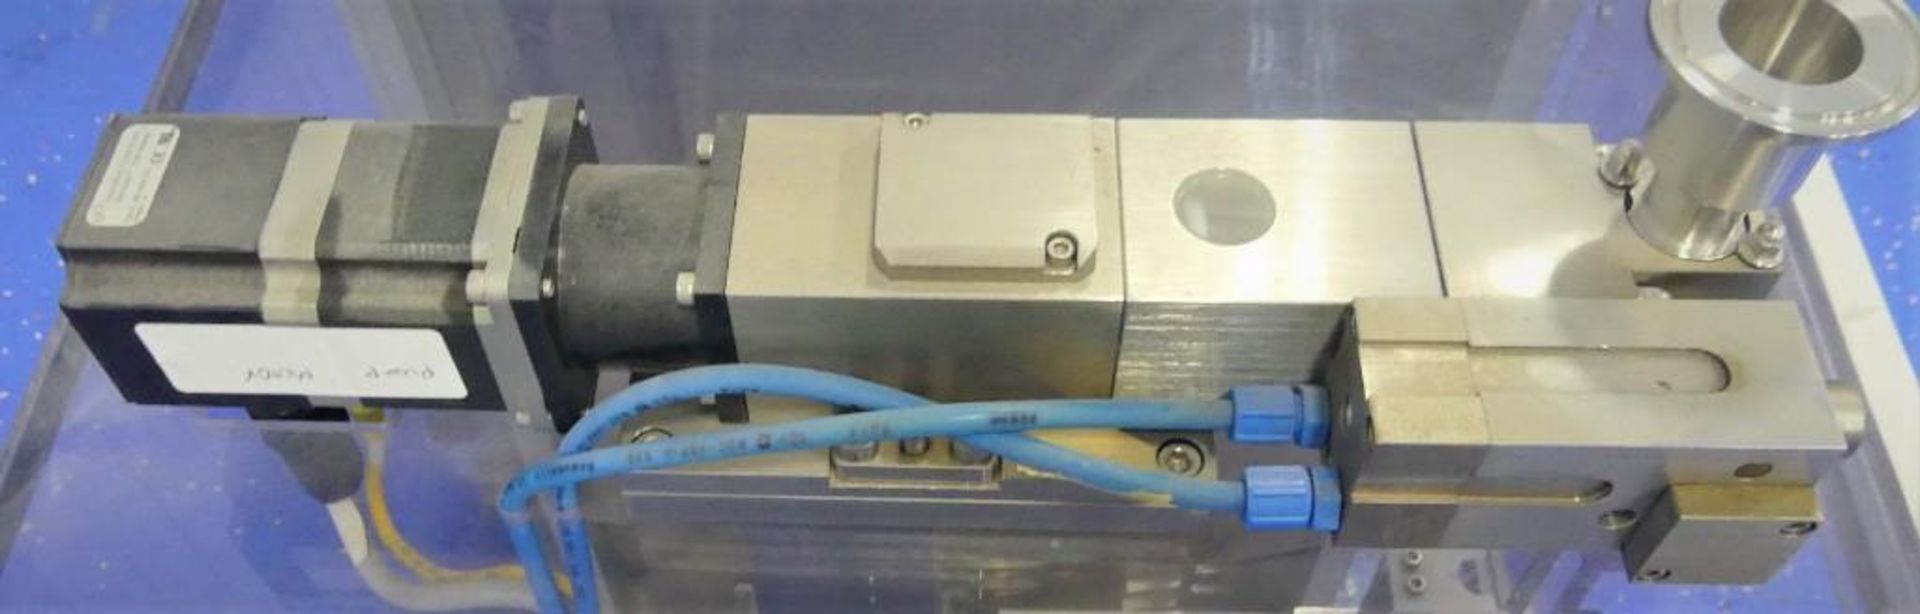 Hibar Servo Dispensing System - Image 10 of 14